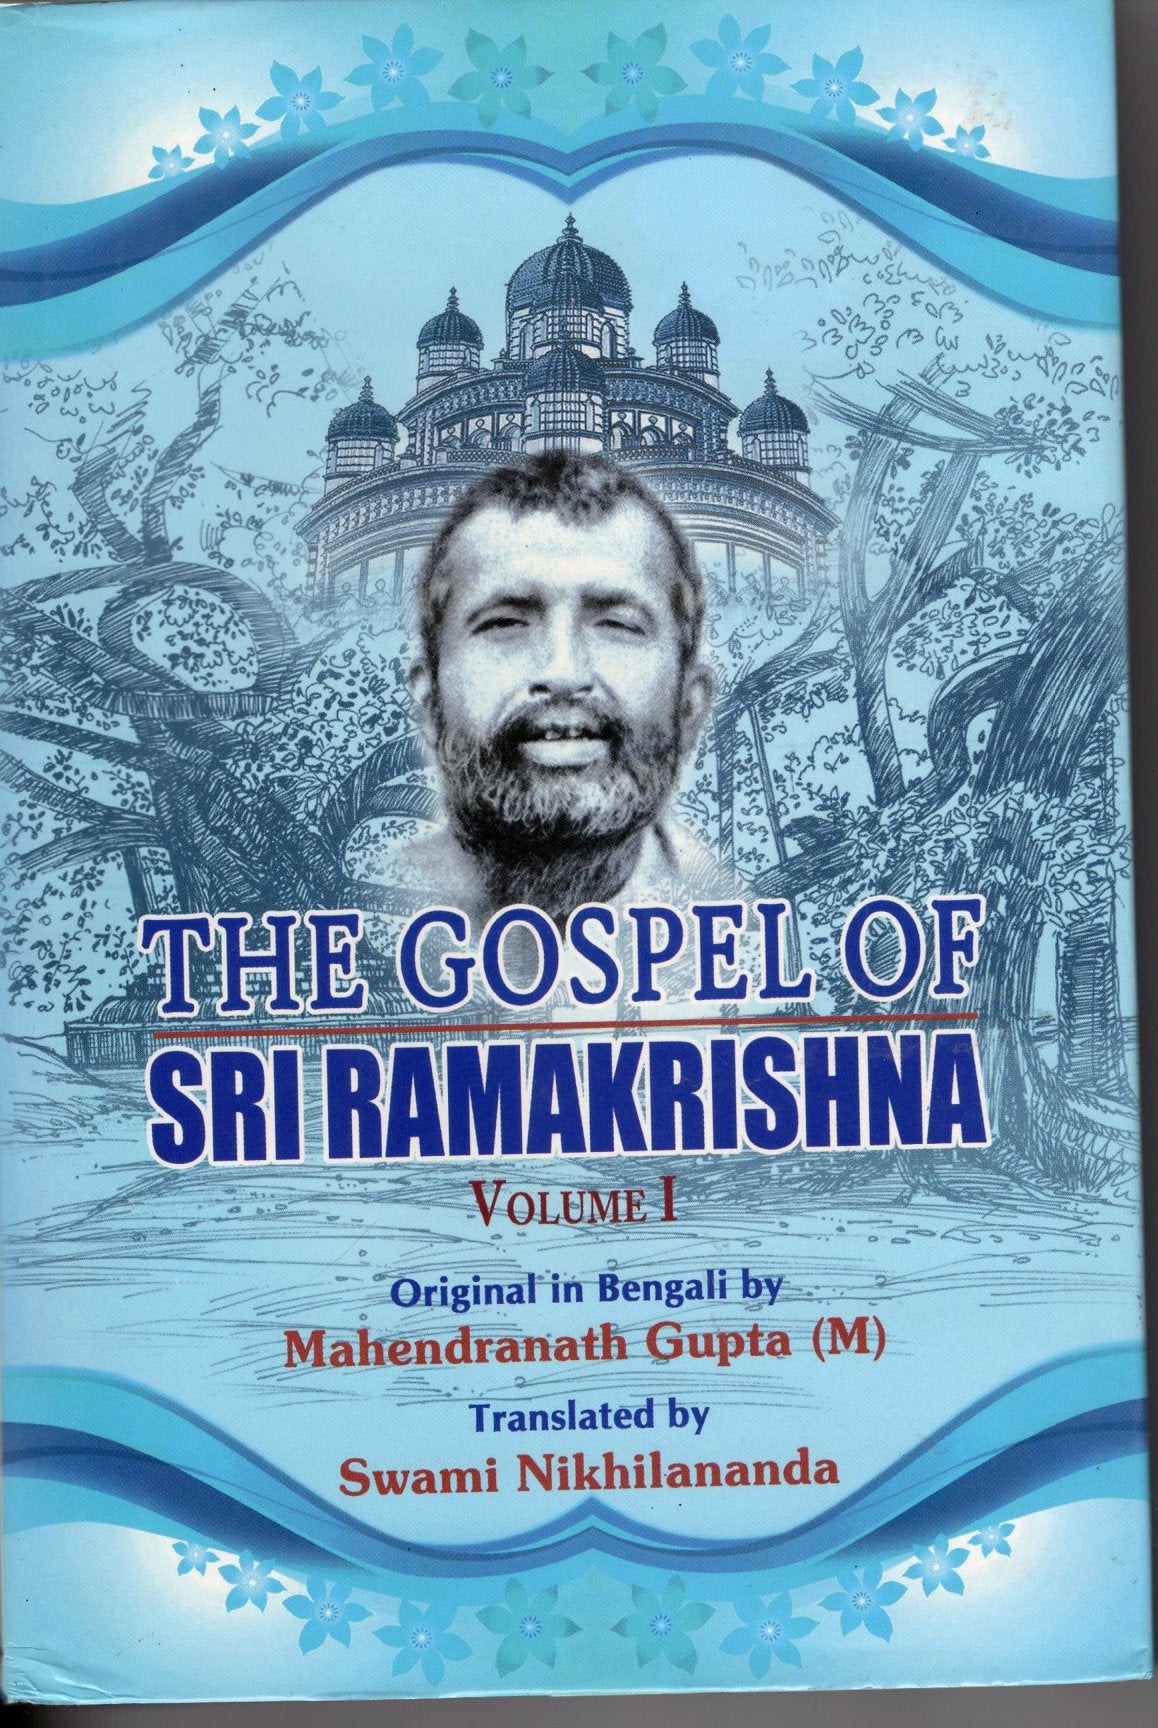 The Gospel of Sri Ramakrishna Volume 1 and 2